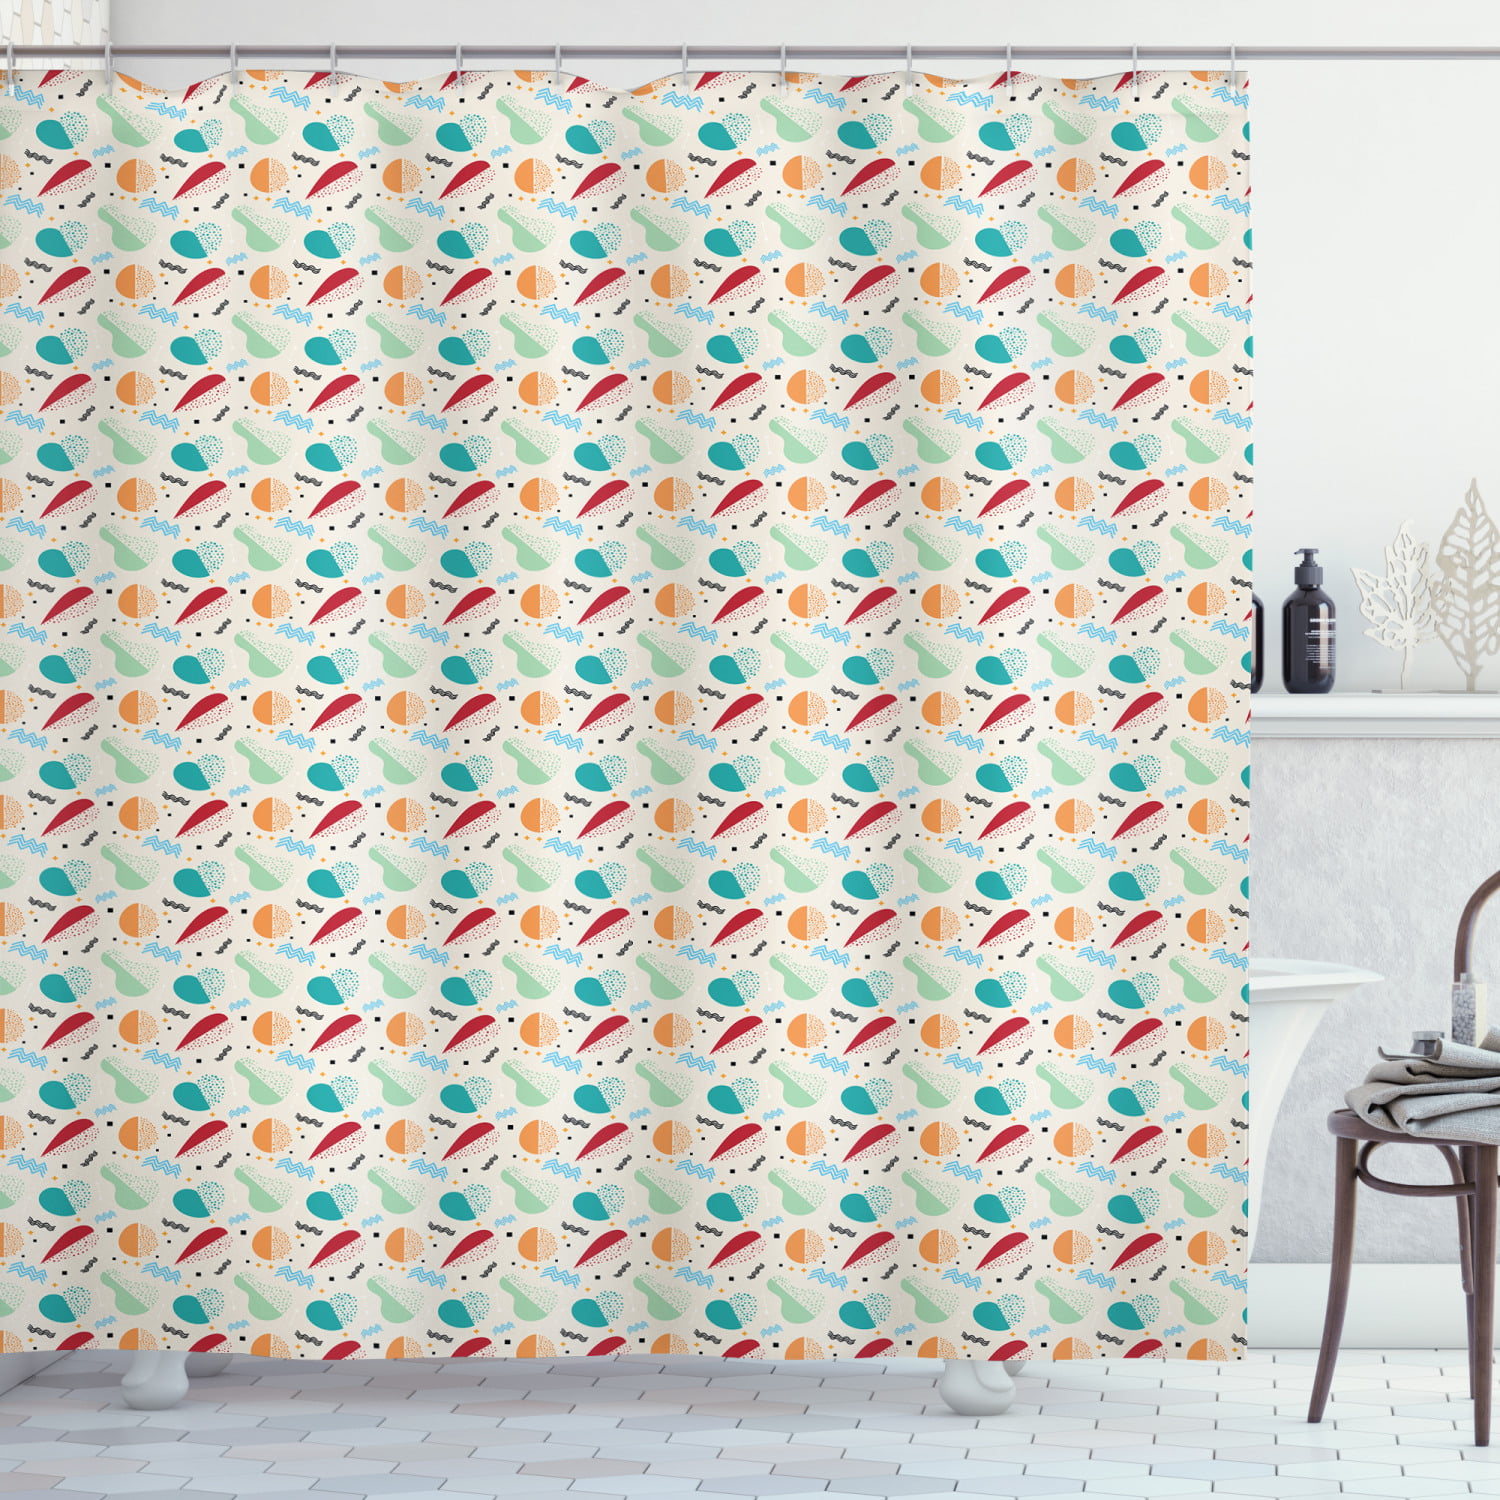 The Carrots Theme Waterproof Fabric Home Decor Shower Curtain Bathroom Mat 